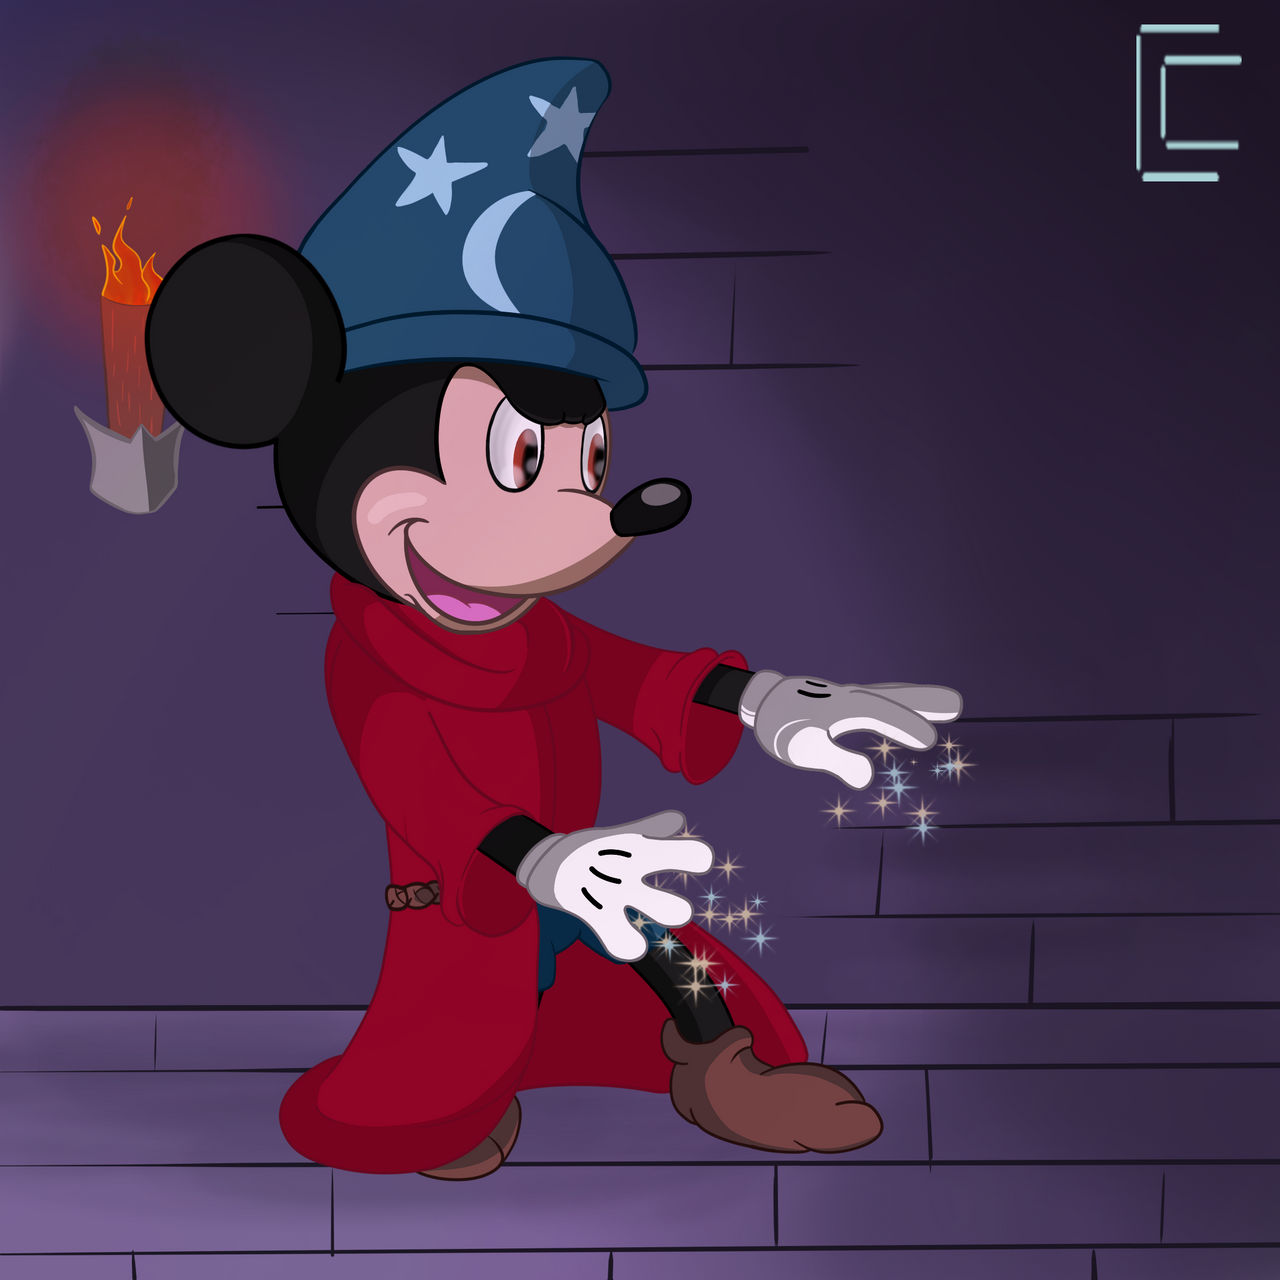 Sorcerer Mickey by CatsbyCorbin on DeviantArt